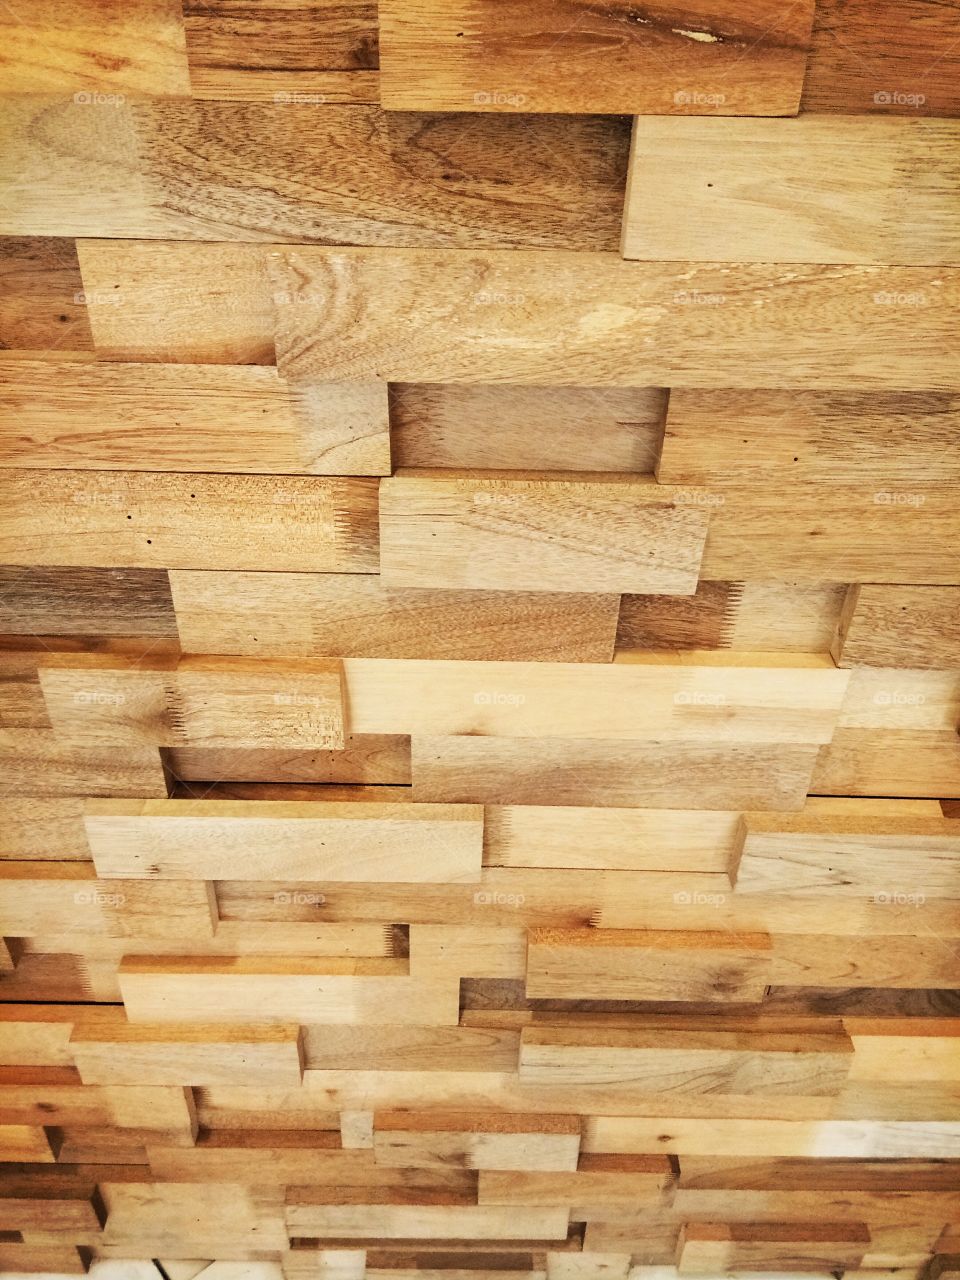 texture
wood
wall